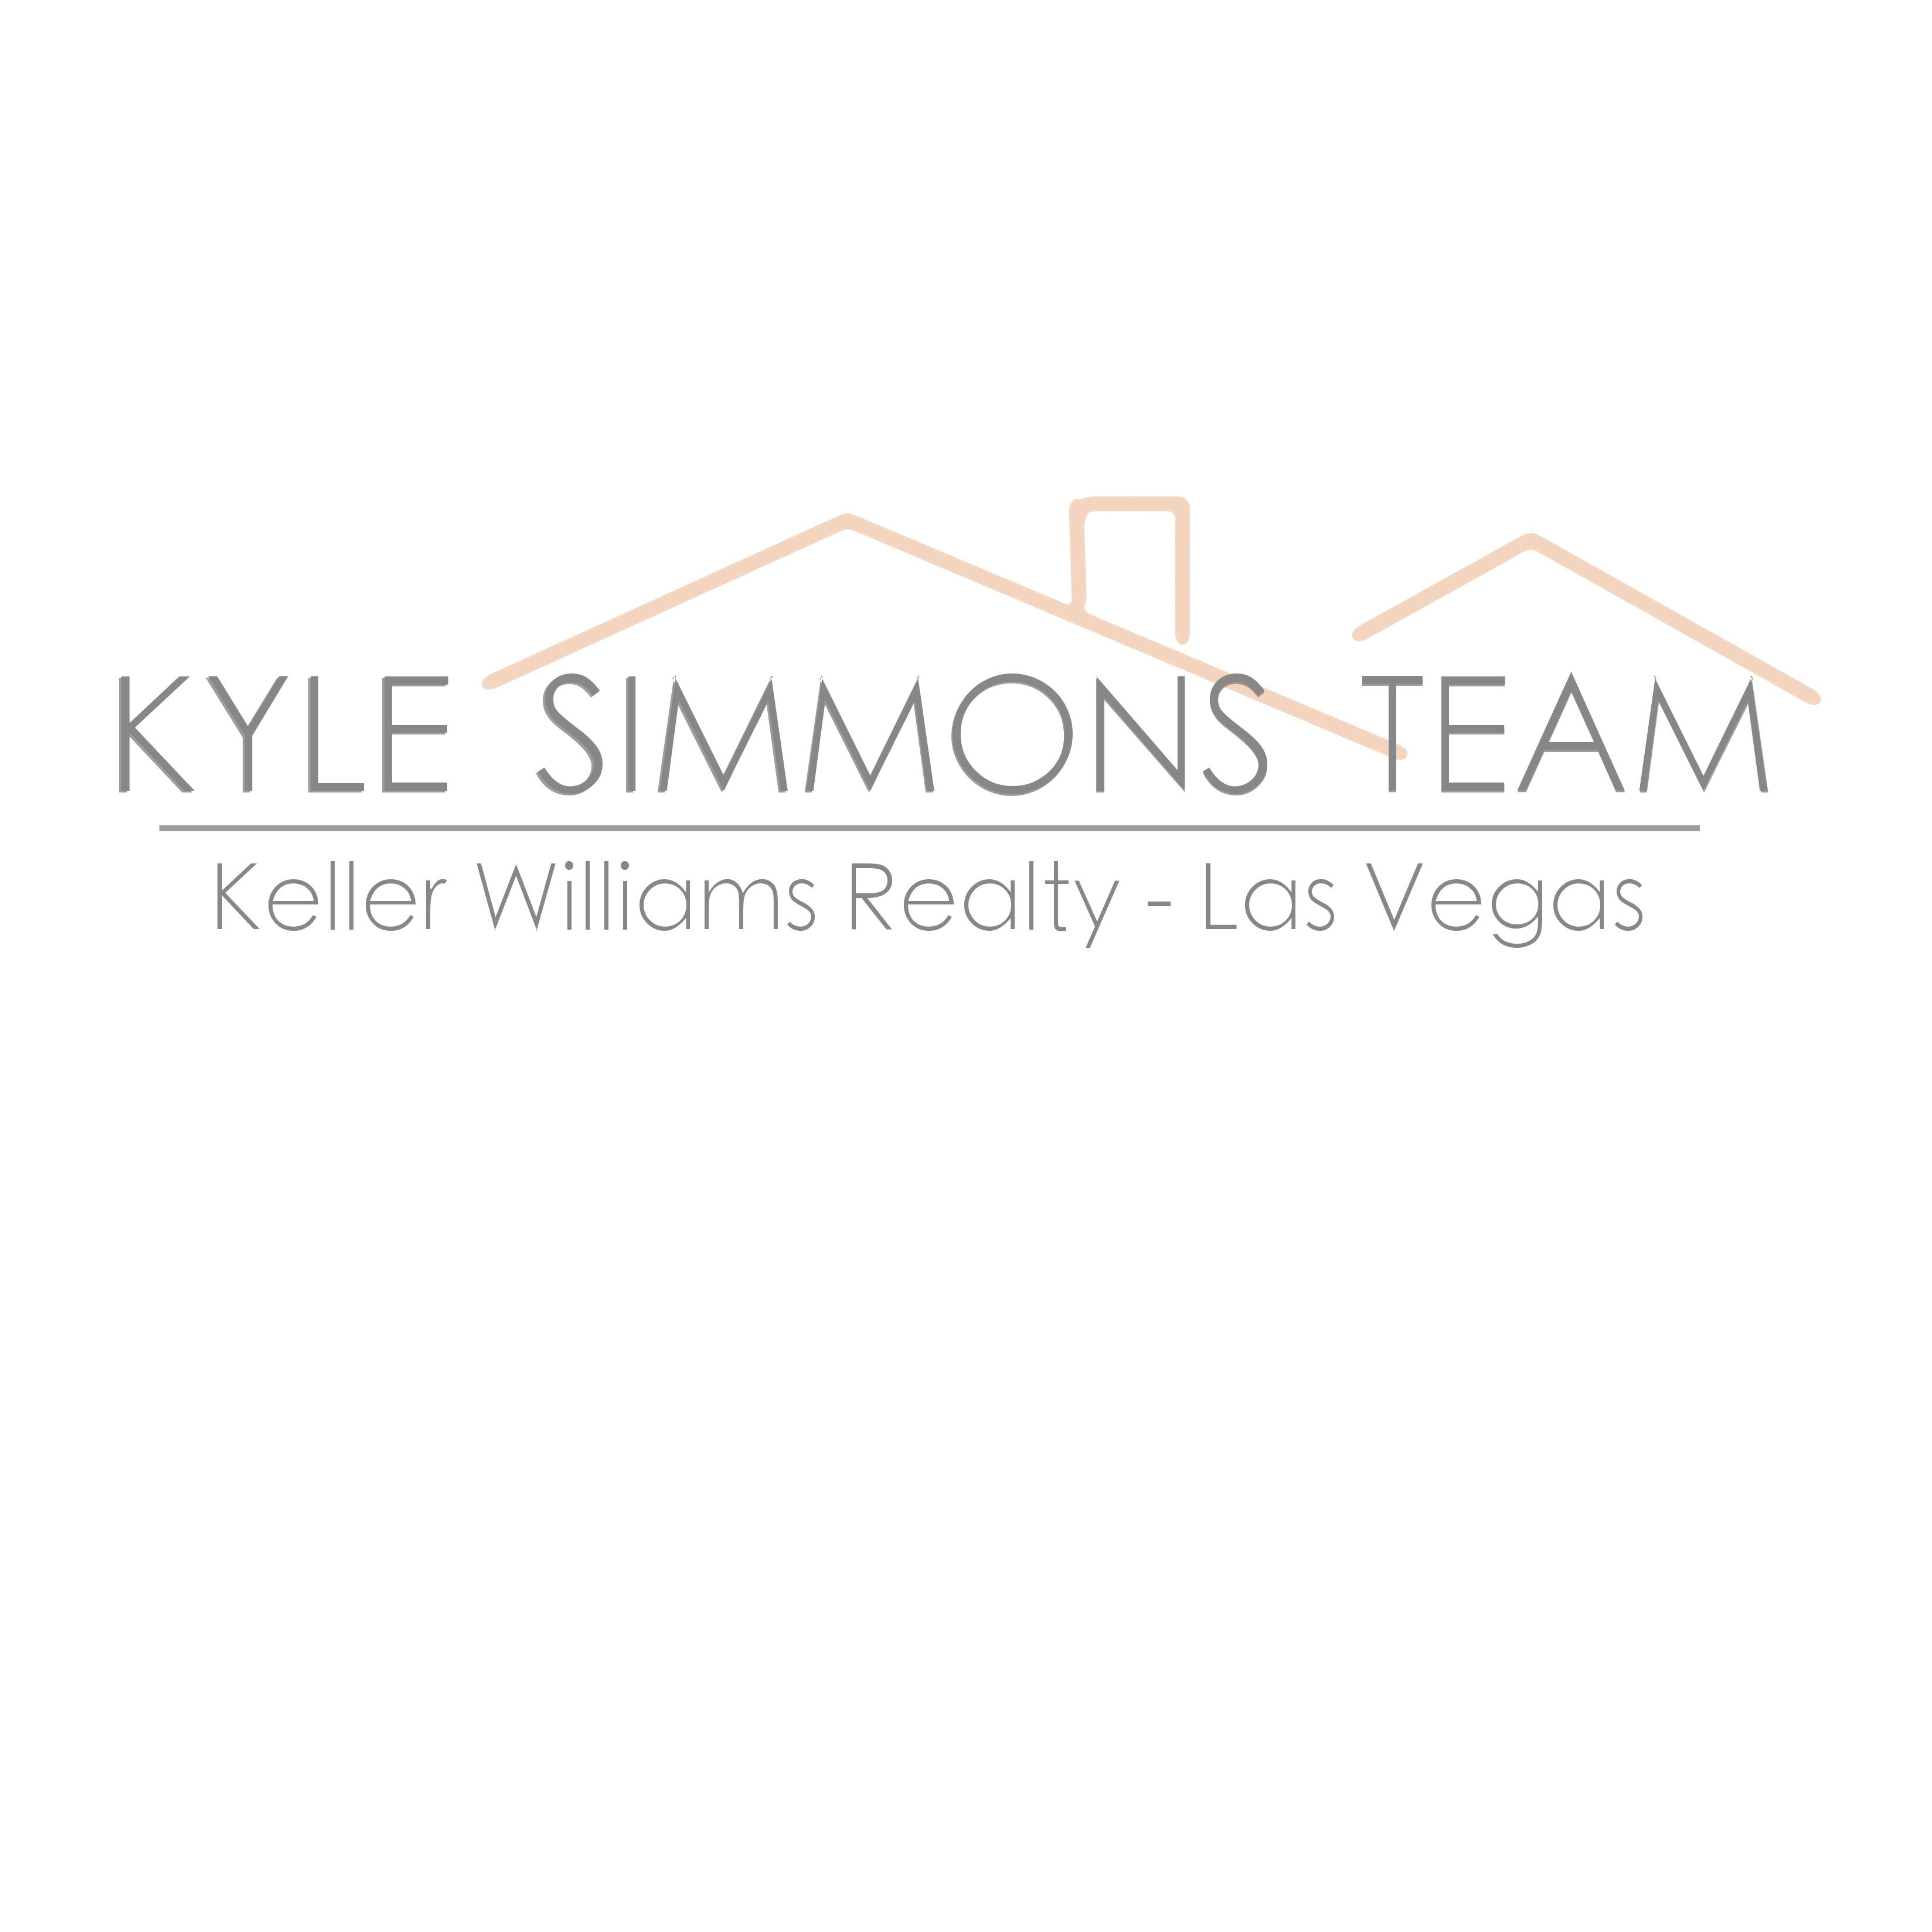 Kyle Simmons Team - Keller Williams Real Estate Las Vegas Logo